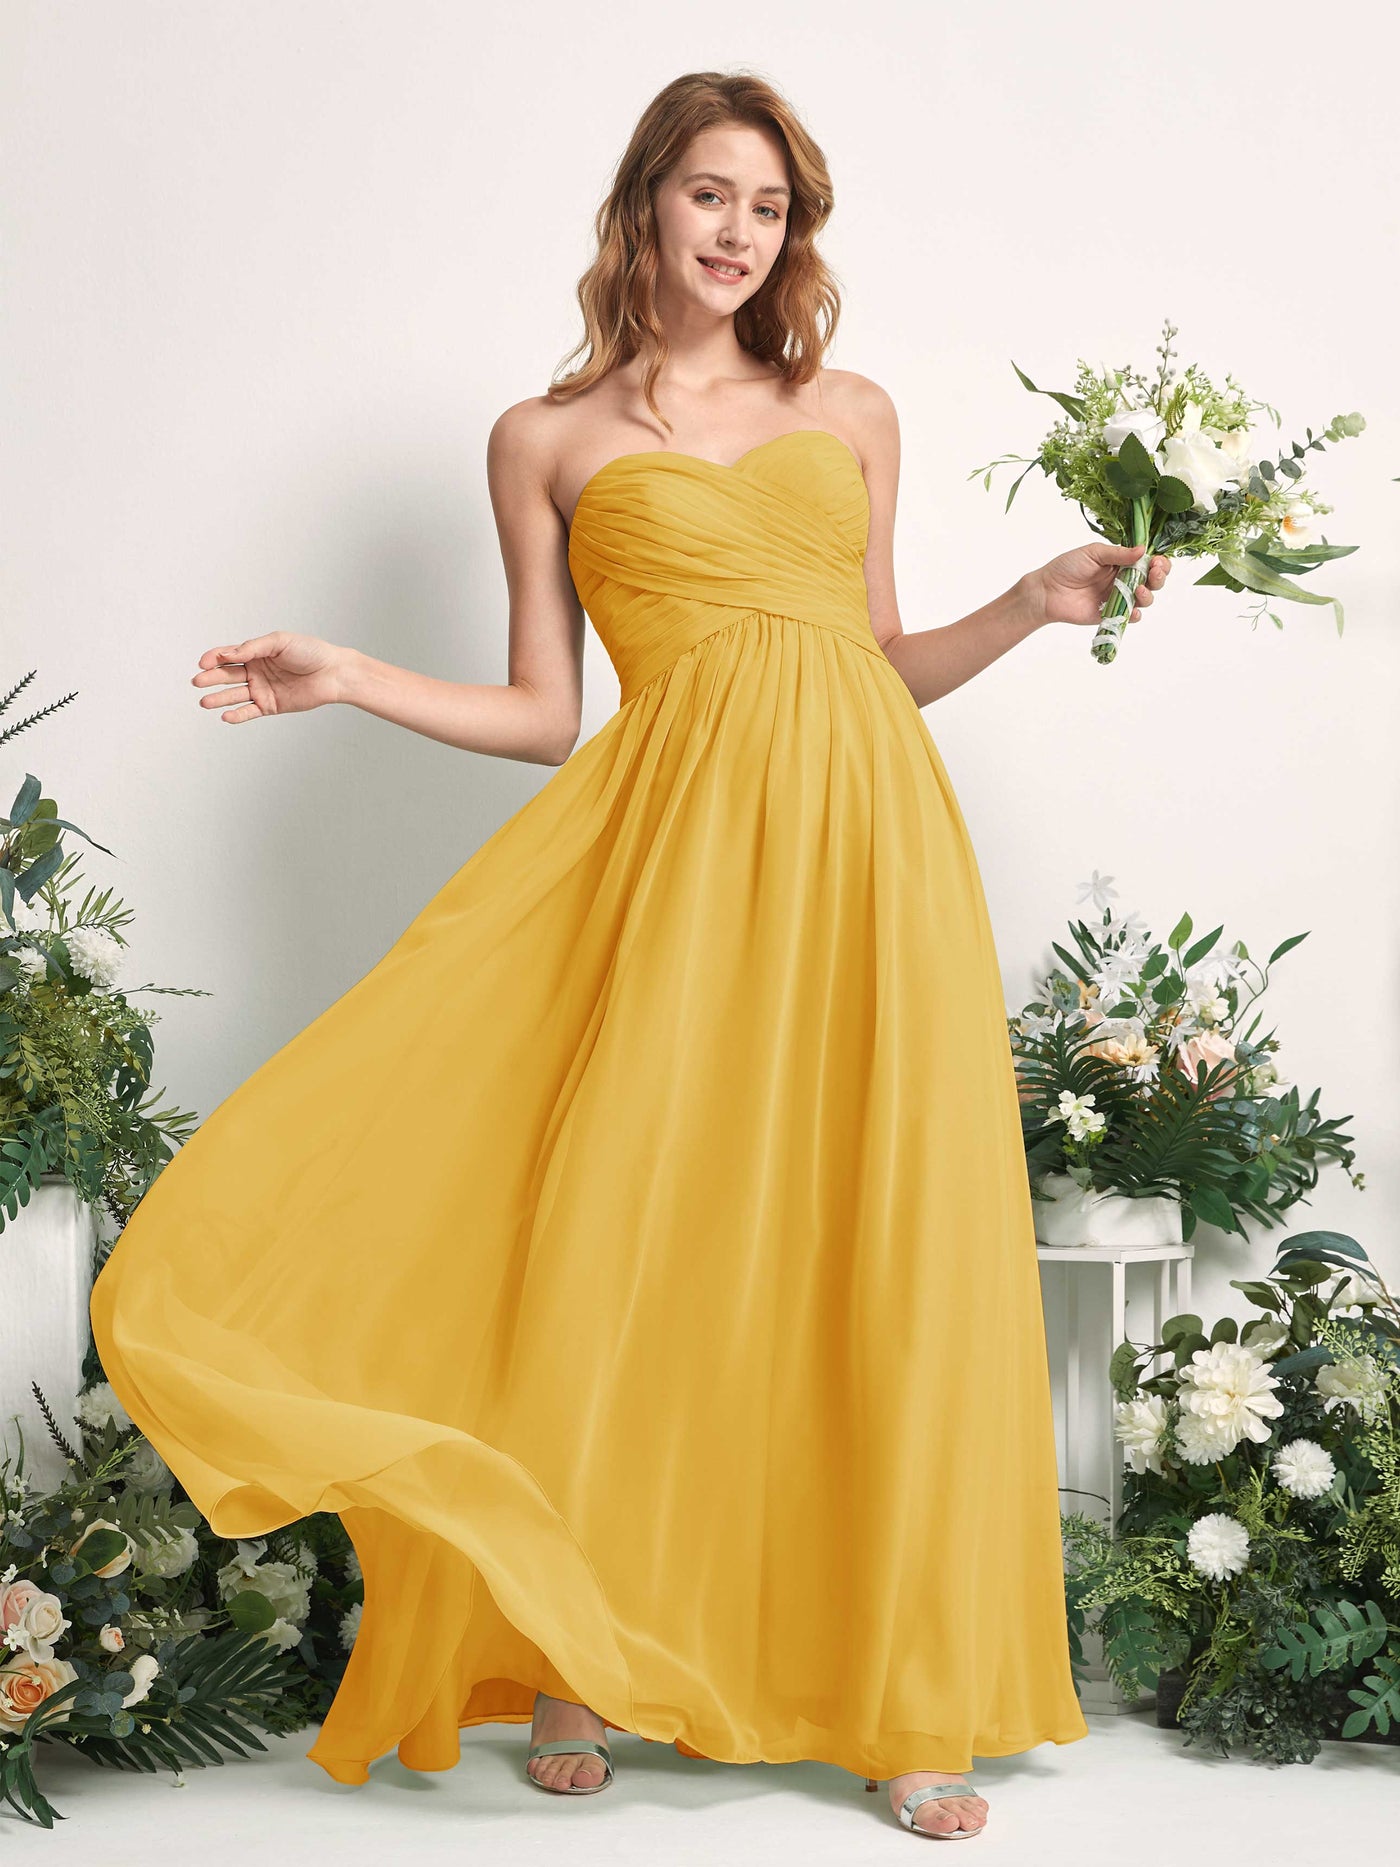 Bridesmaid Dress A-line Chiffon Sweetheart Full Length Sleeveless Wedding Party Dress - Mustard Yellow (81226933)#color_mustard-yellow